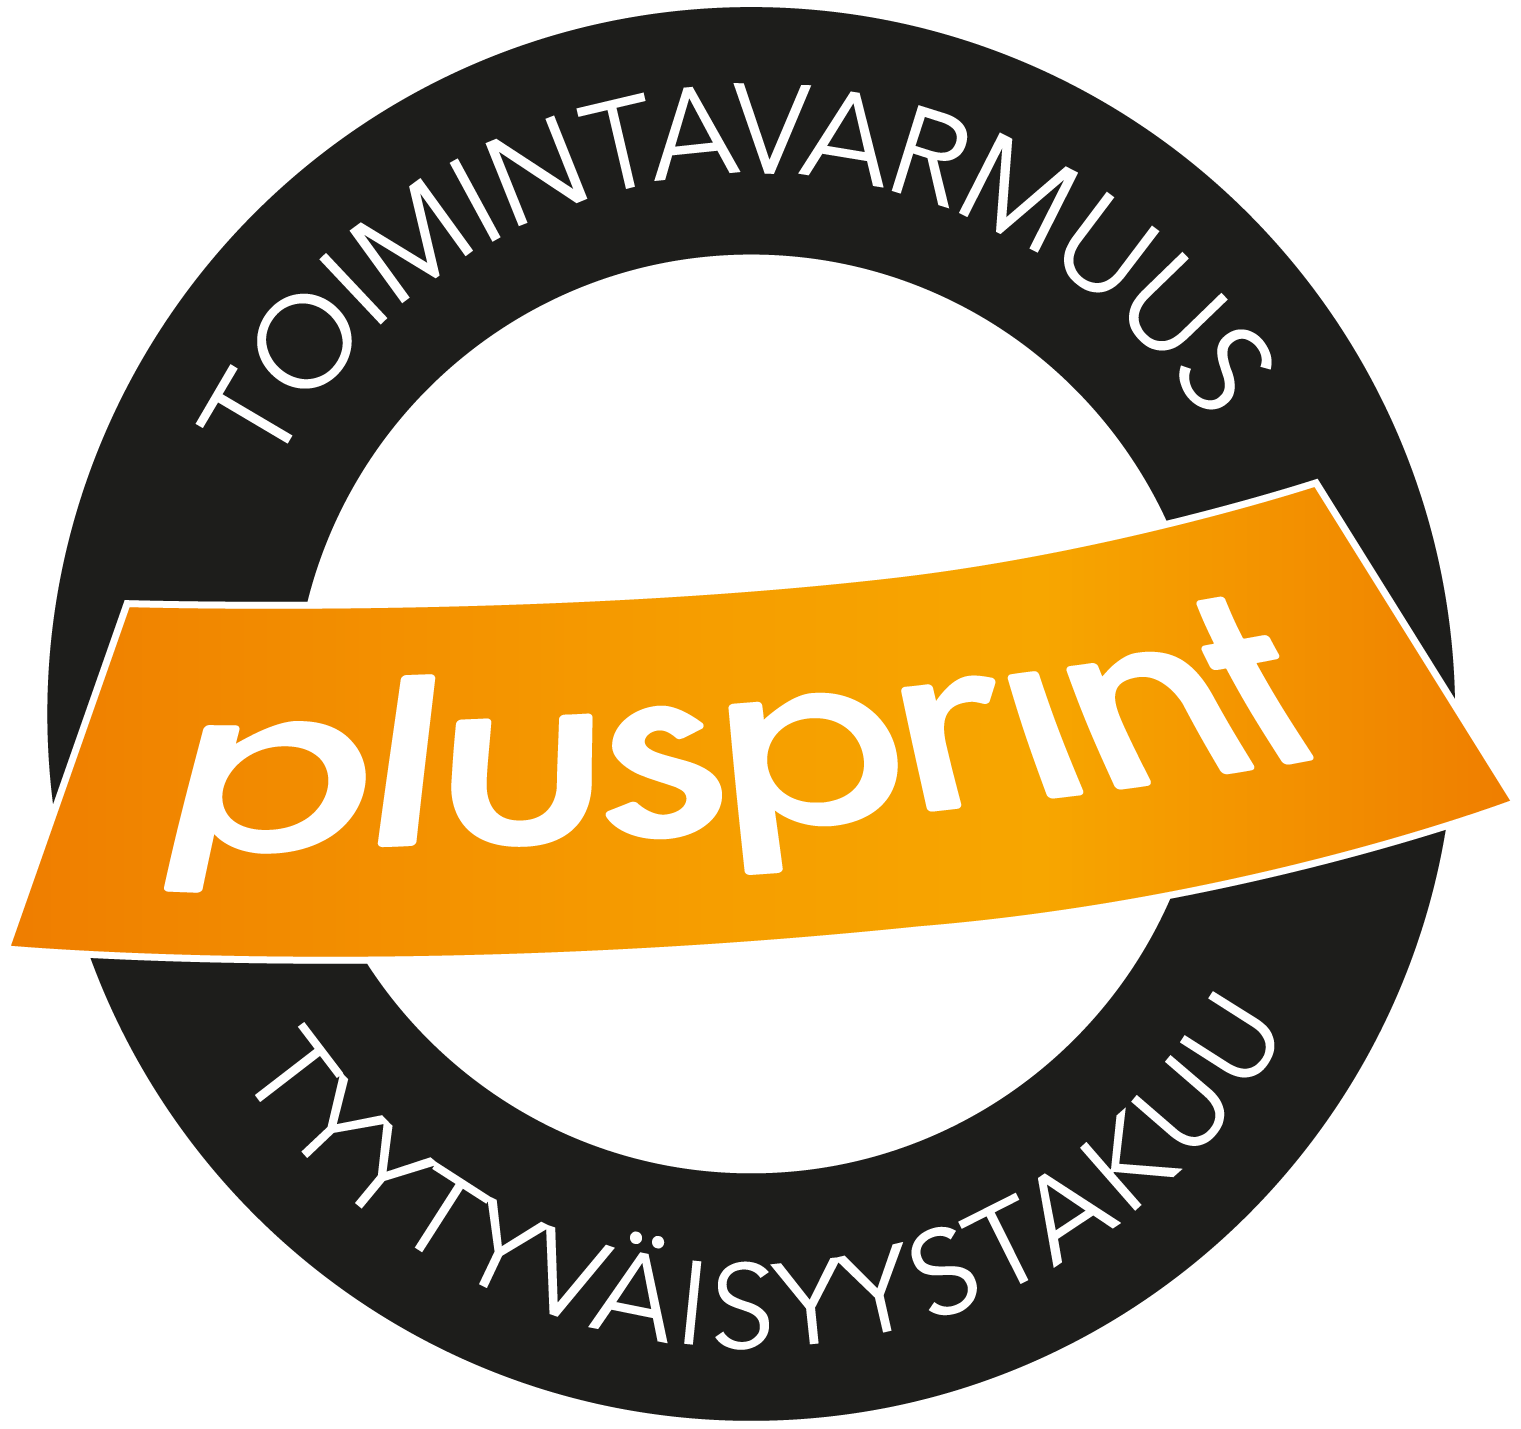 Plusprint